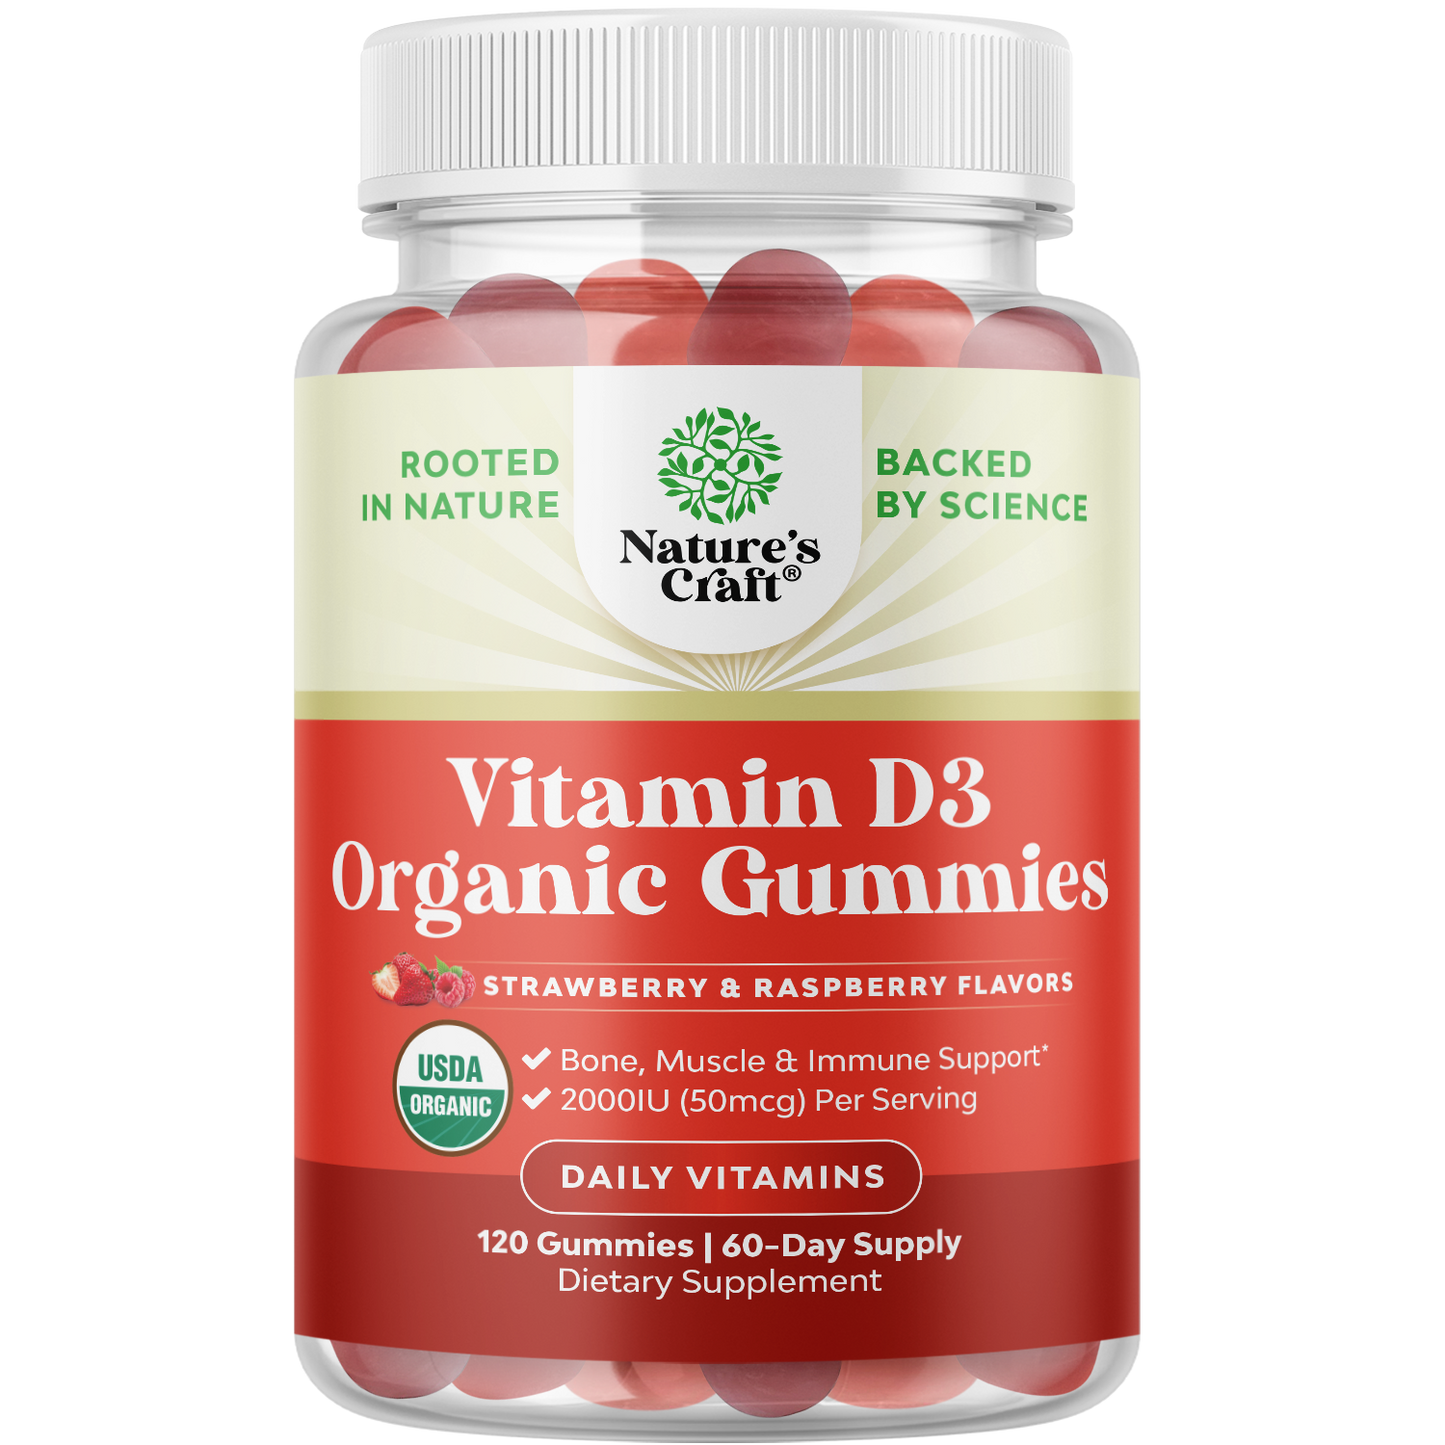 Vitamin D3 Organic Gummies 2000IU per serving - 120 Gummies